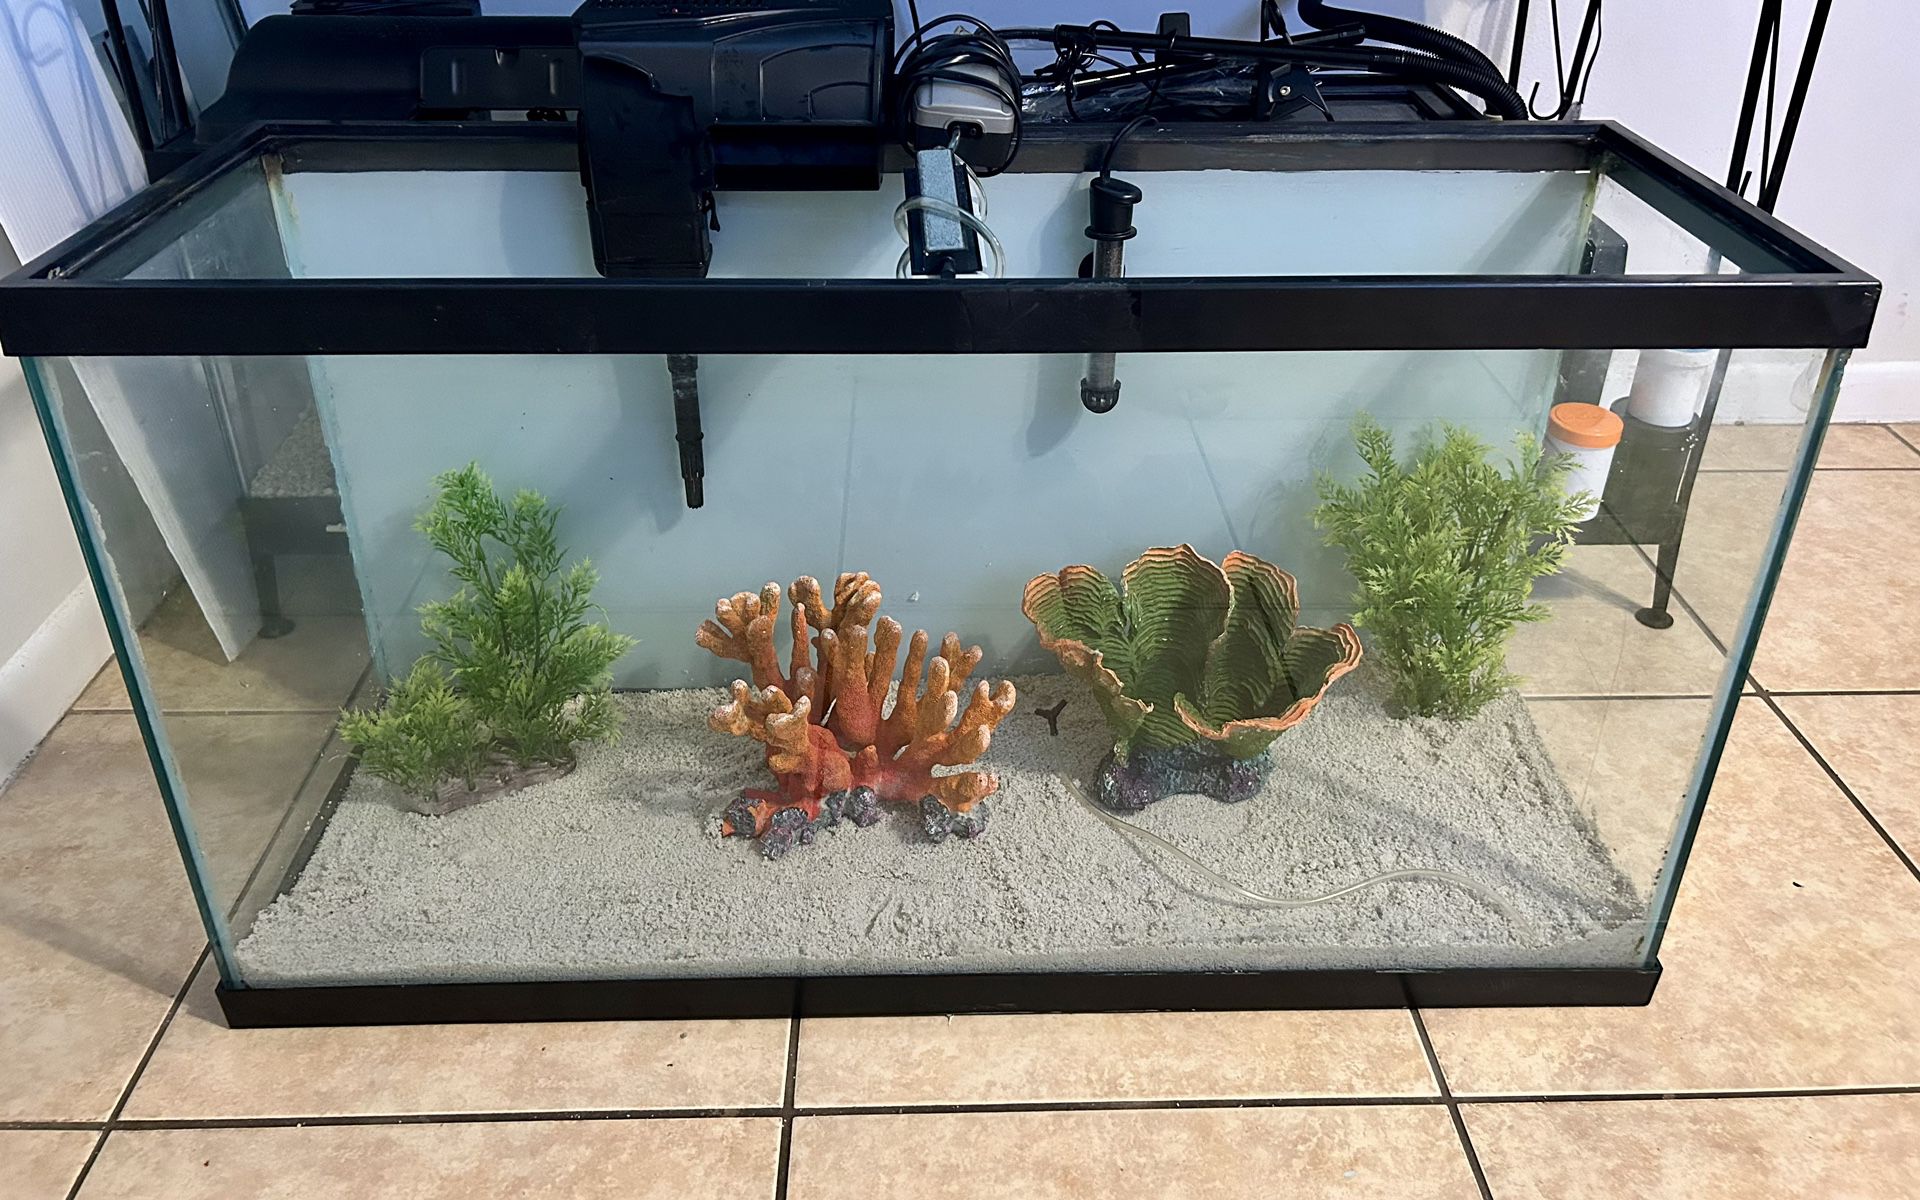 40 Gallon Fish Tank Aquarium With Extras $80 